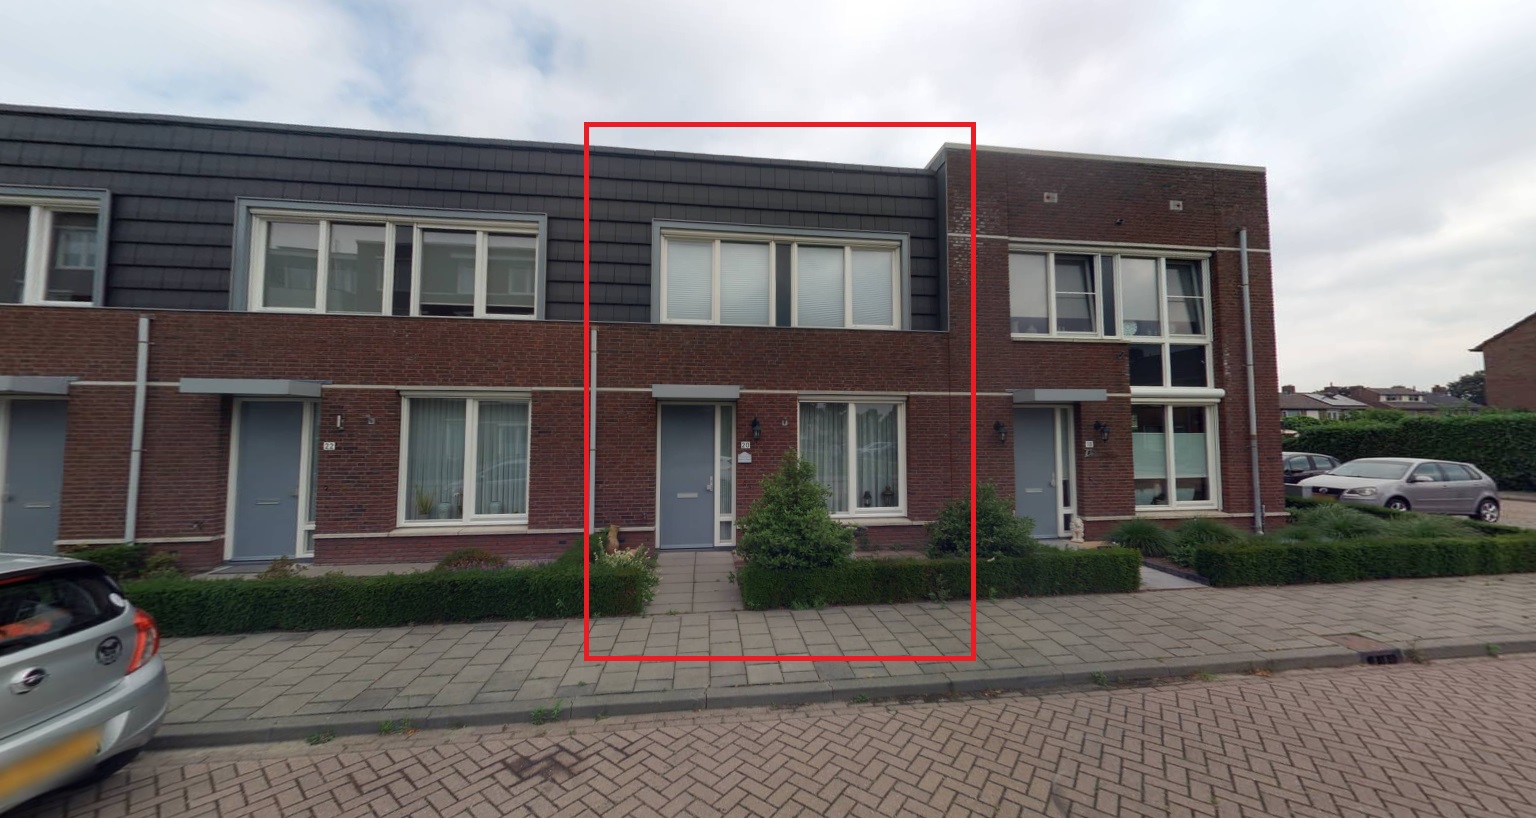 Christinestraat 20, 5161 XB Sprang-Capelle, Nederland